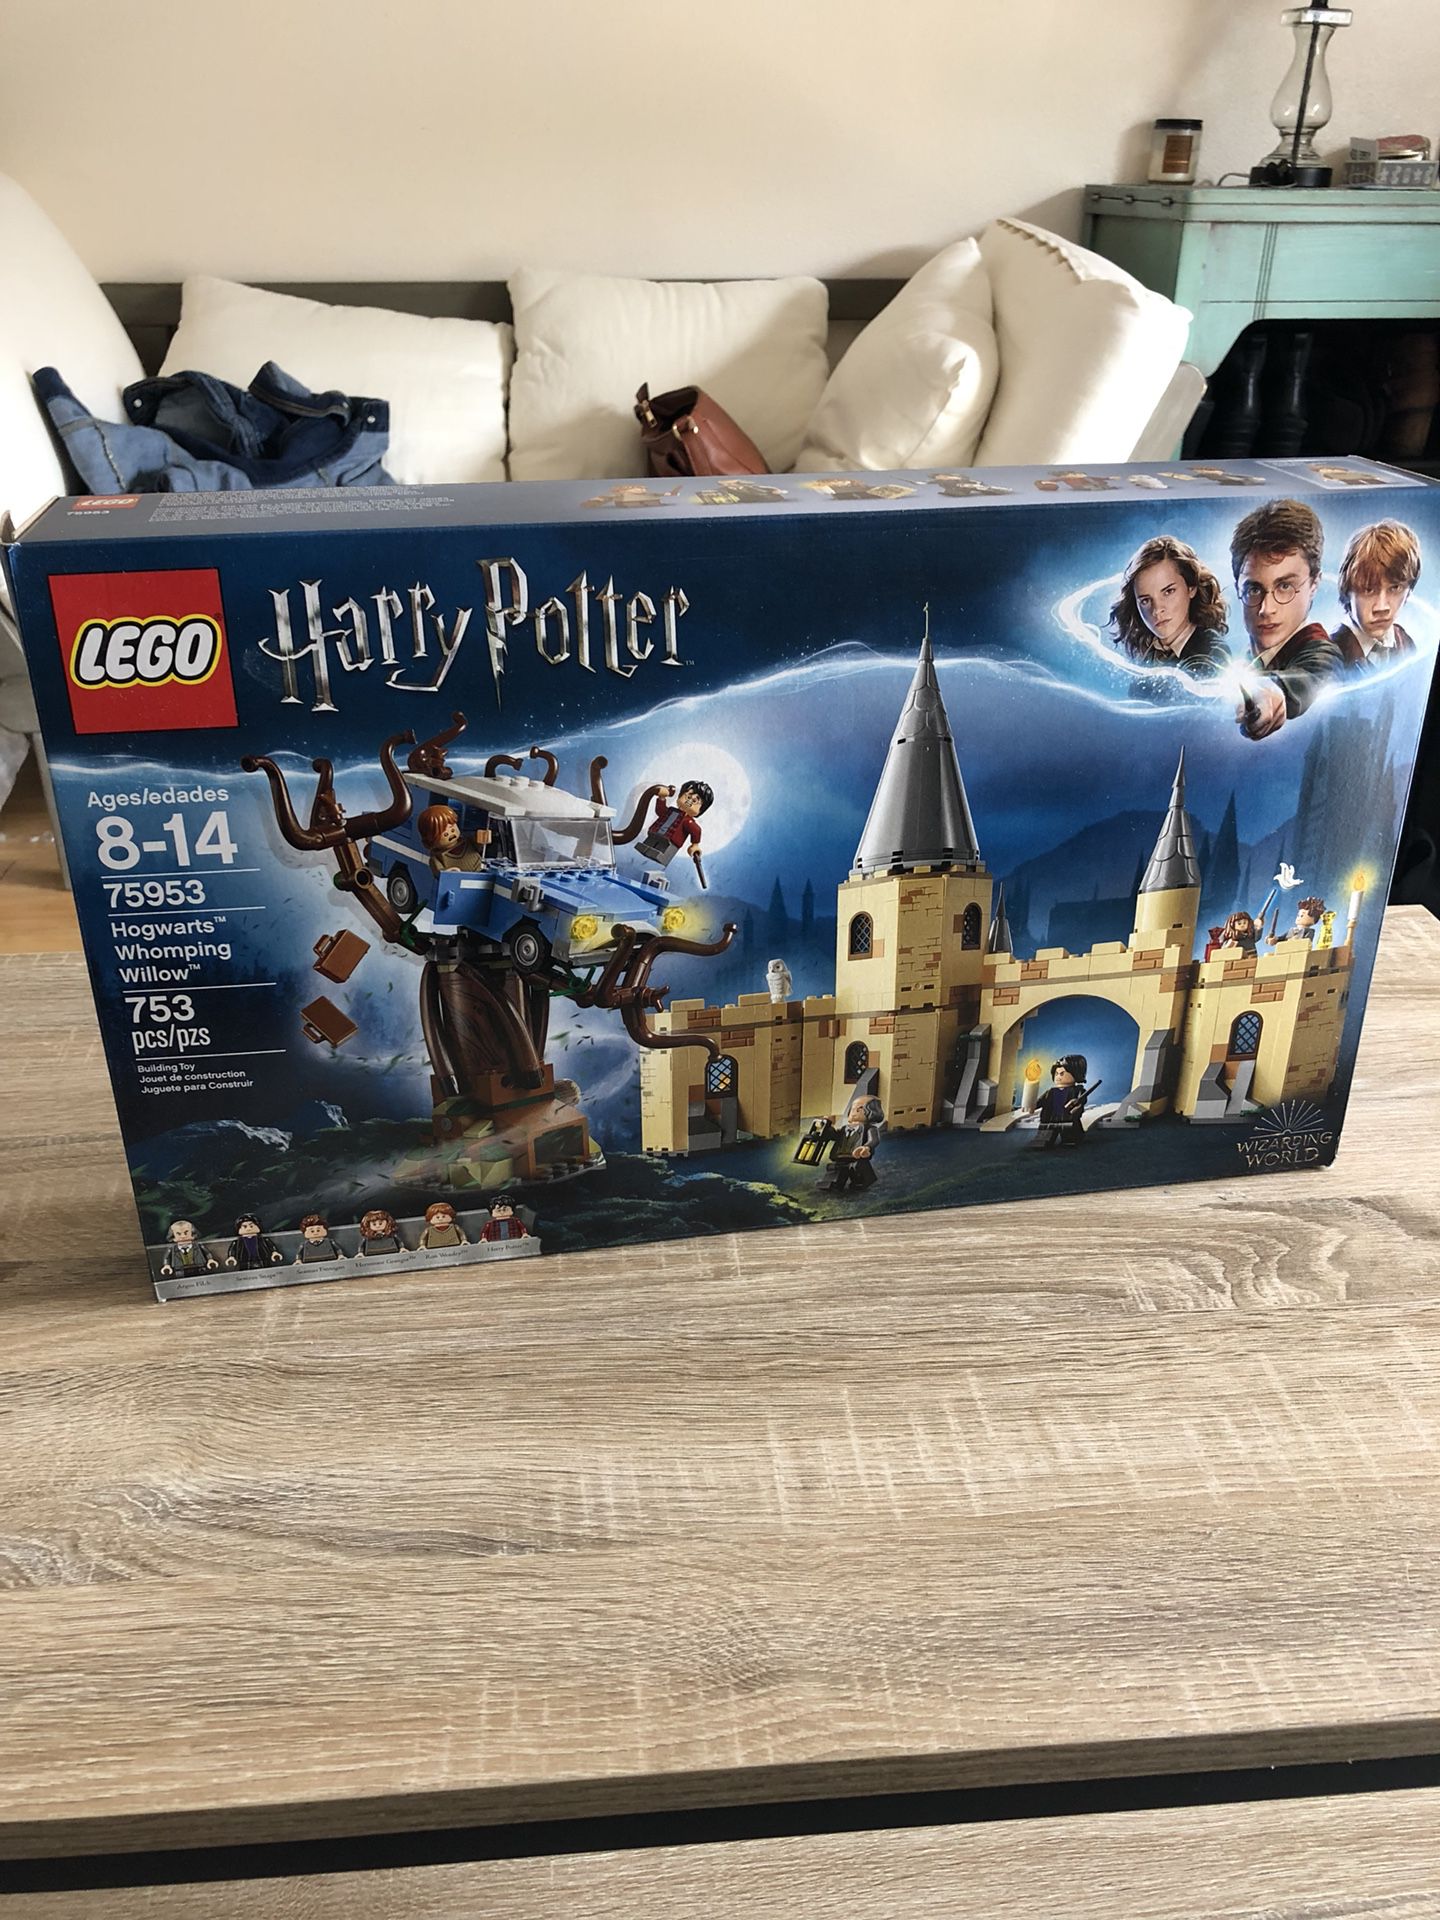 Harry Potter LEGO set